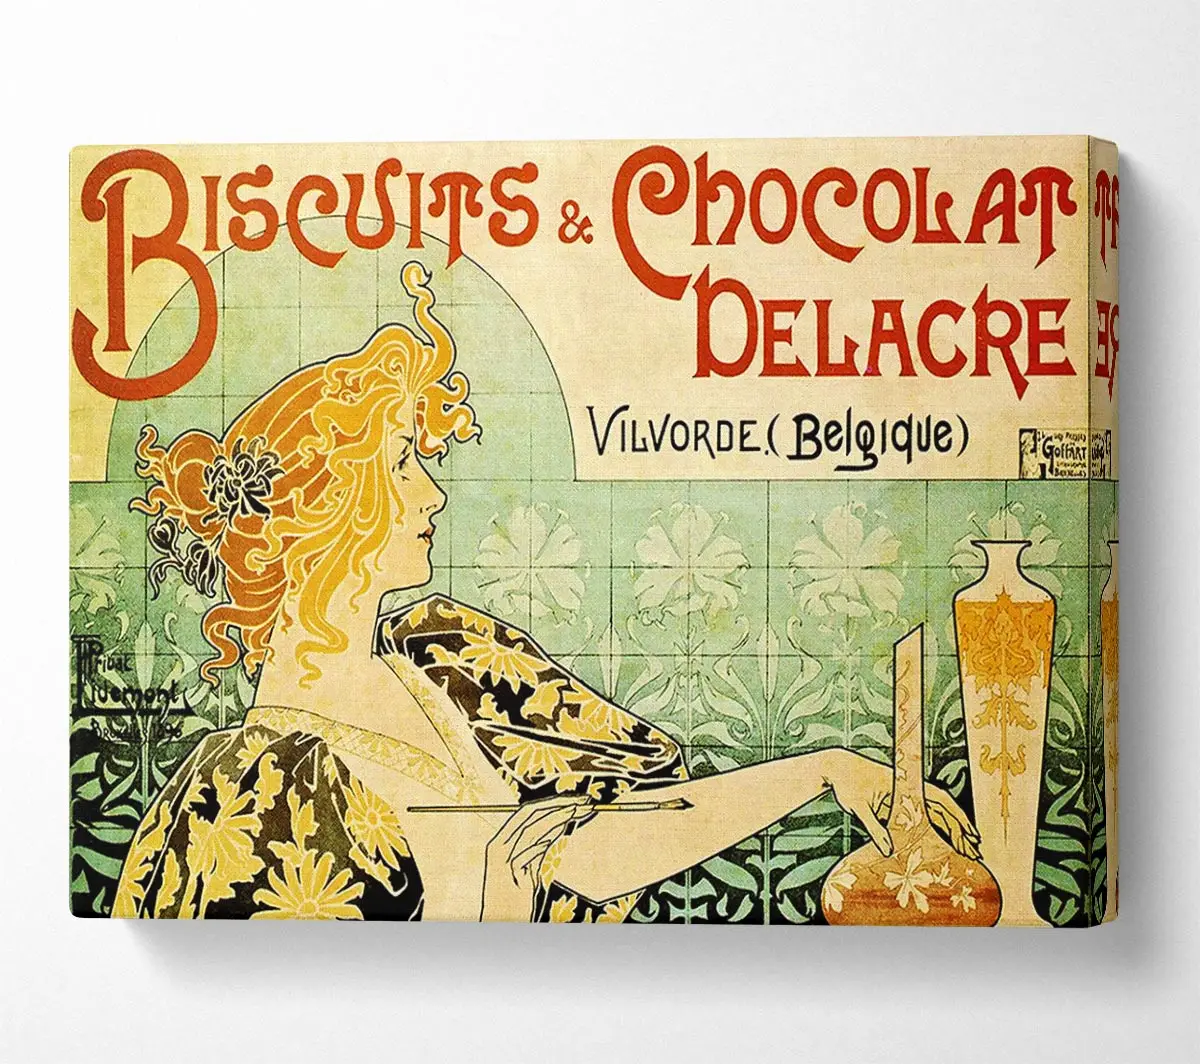 Kekse Chocolat und Wandkunst Delacre